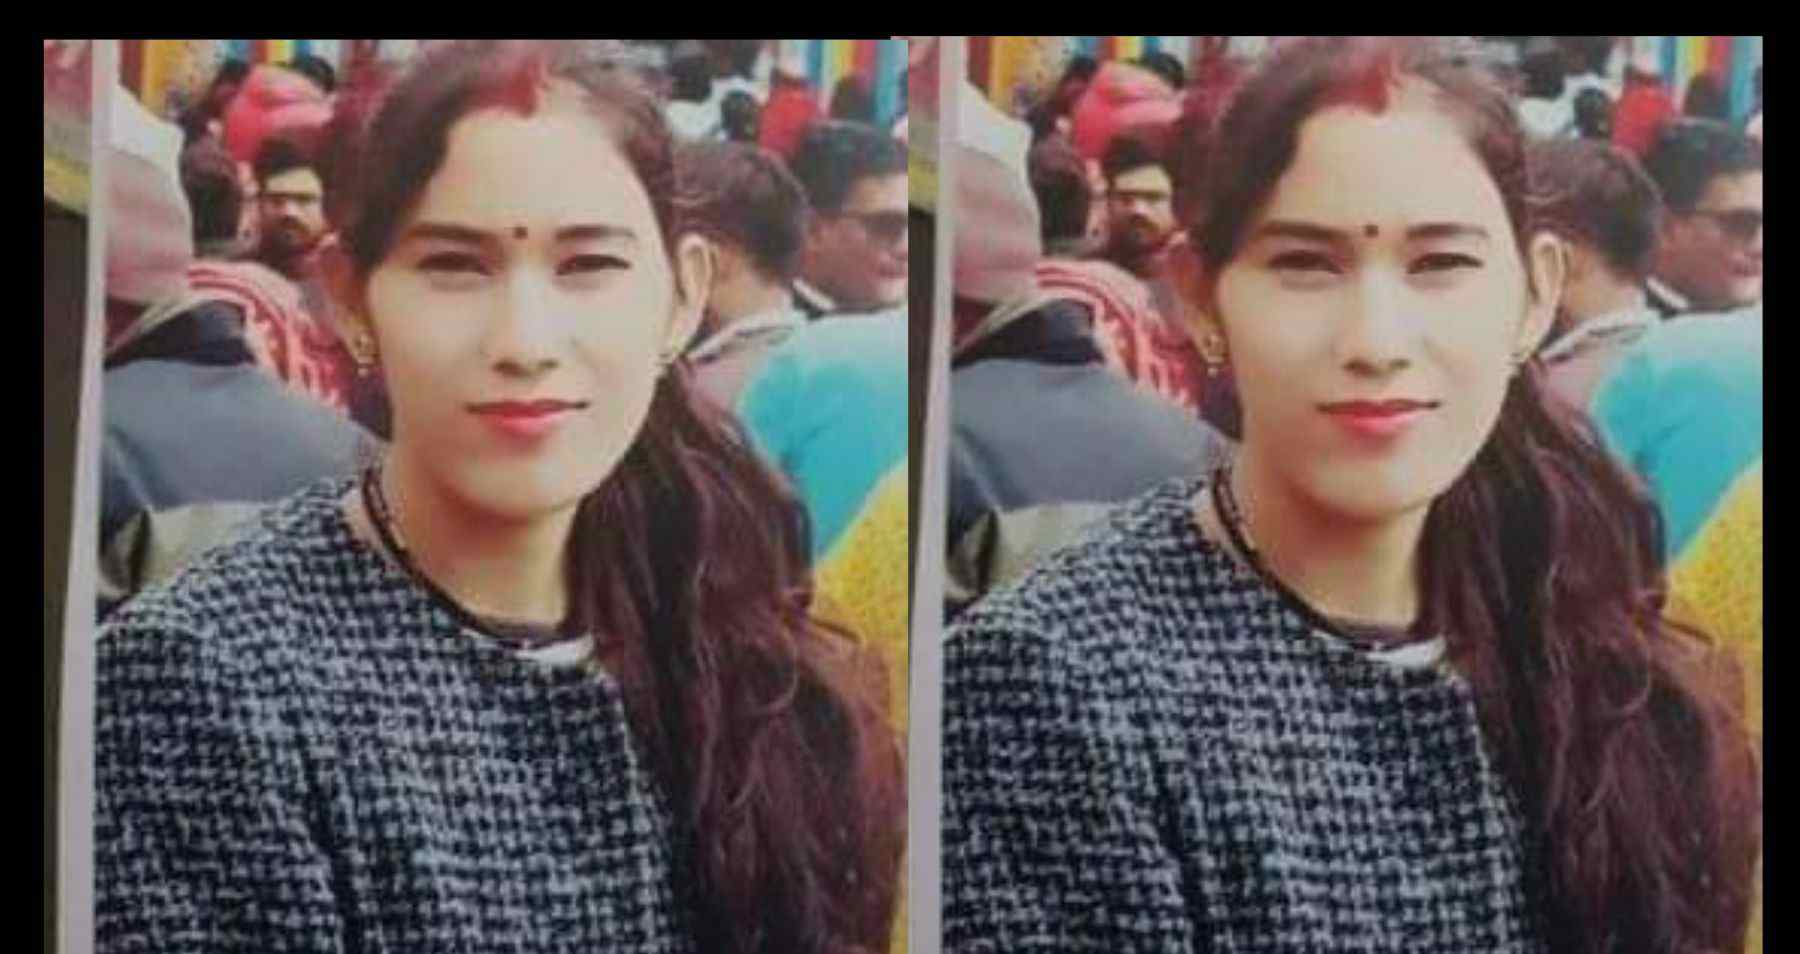 Uttarakhand news: Meena adhikari of majkhali ranikhet missing in Haldwani Meena adhikari missing haldwani news today